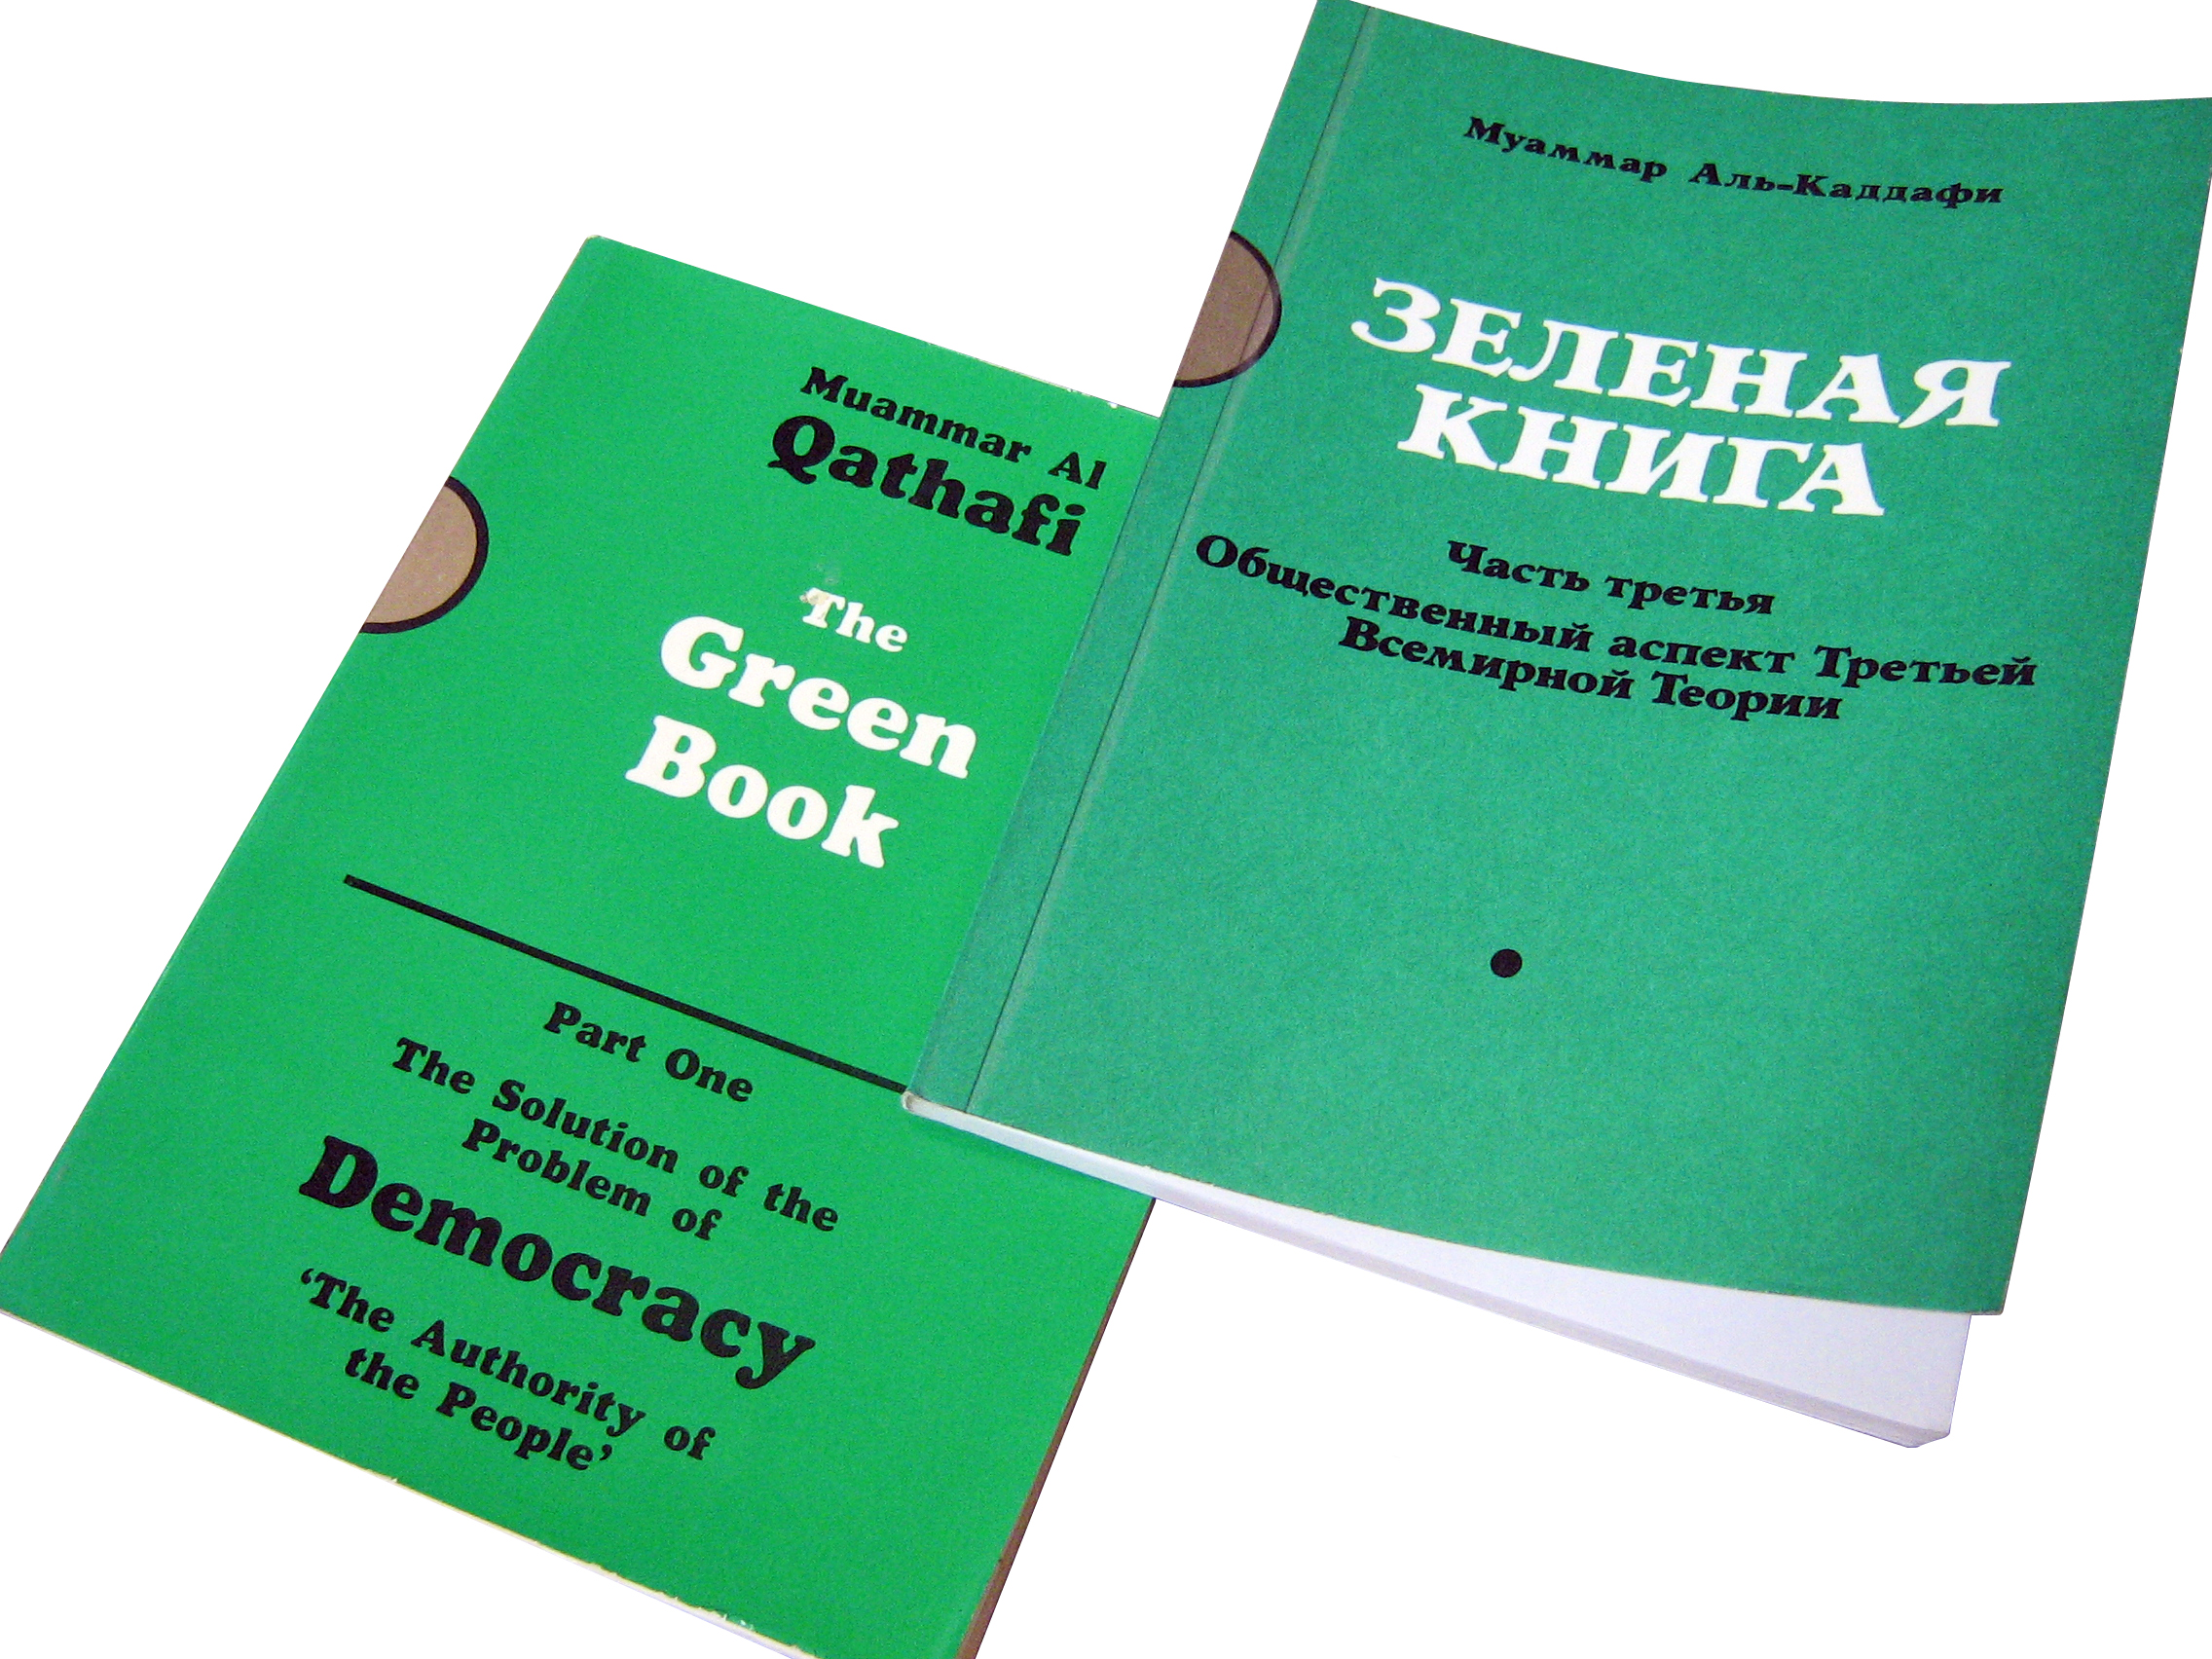 Green_book